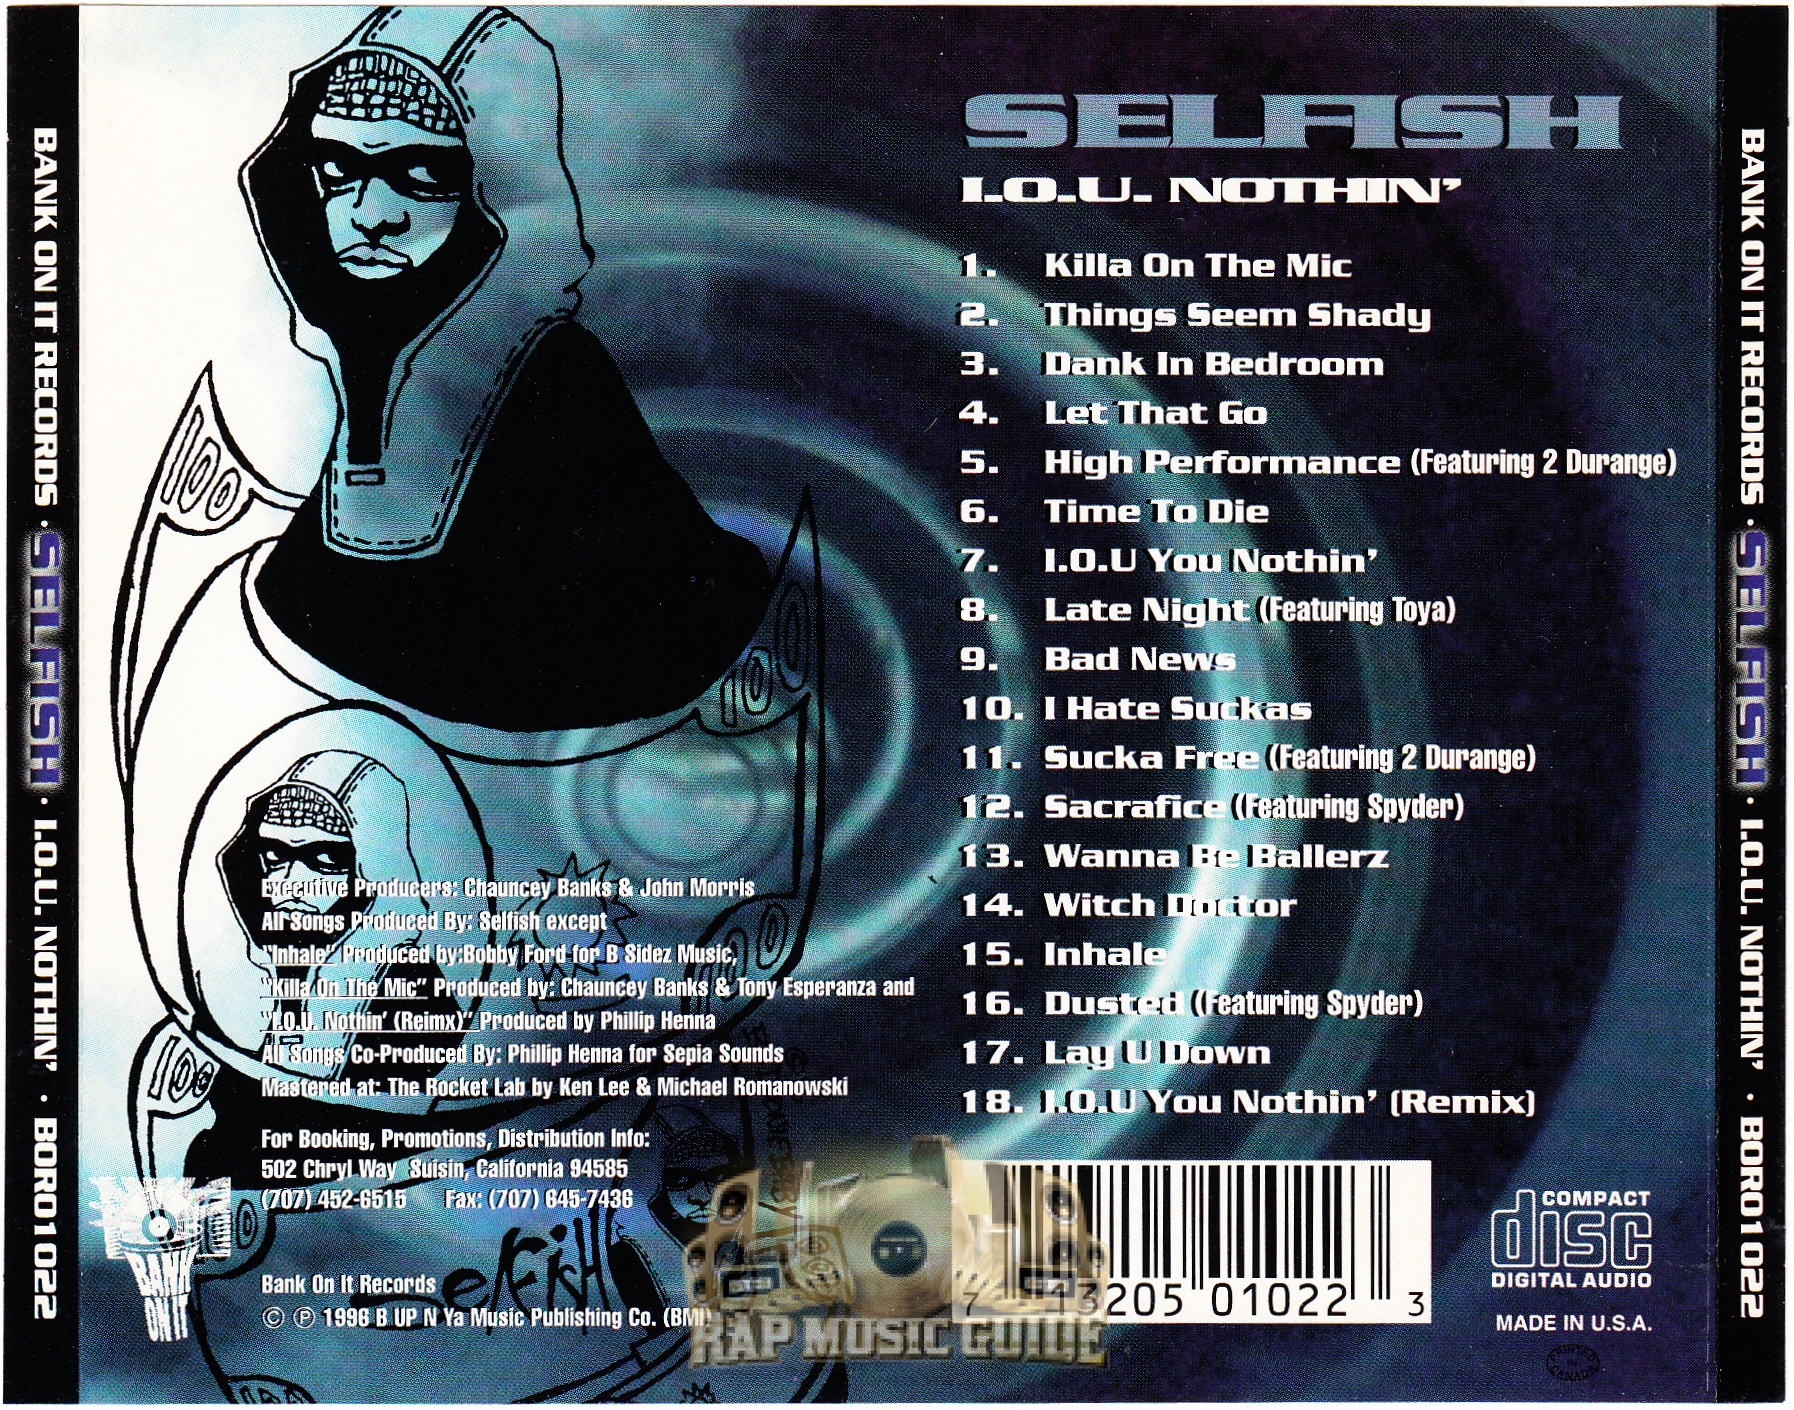 Selfish - I.O.U. Nothin': CD | Rap Music Guide